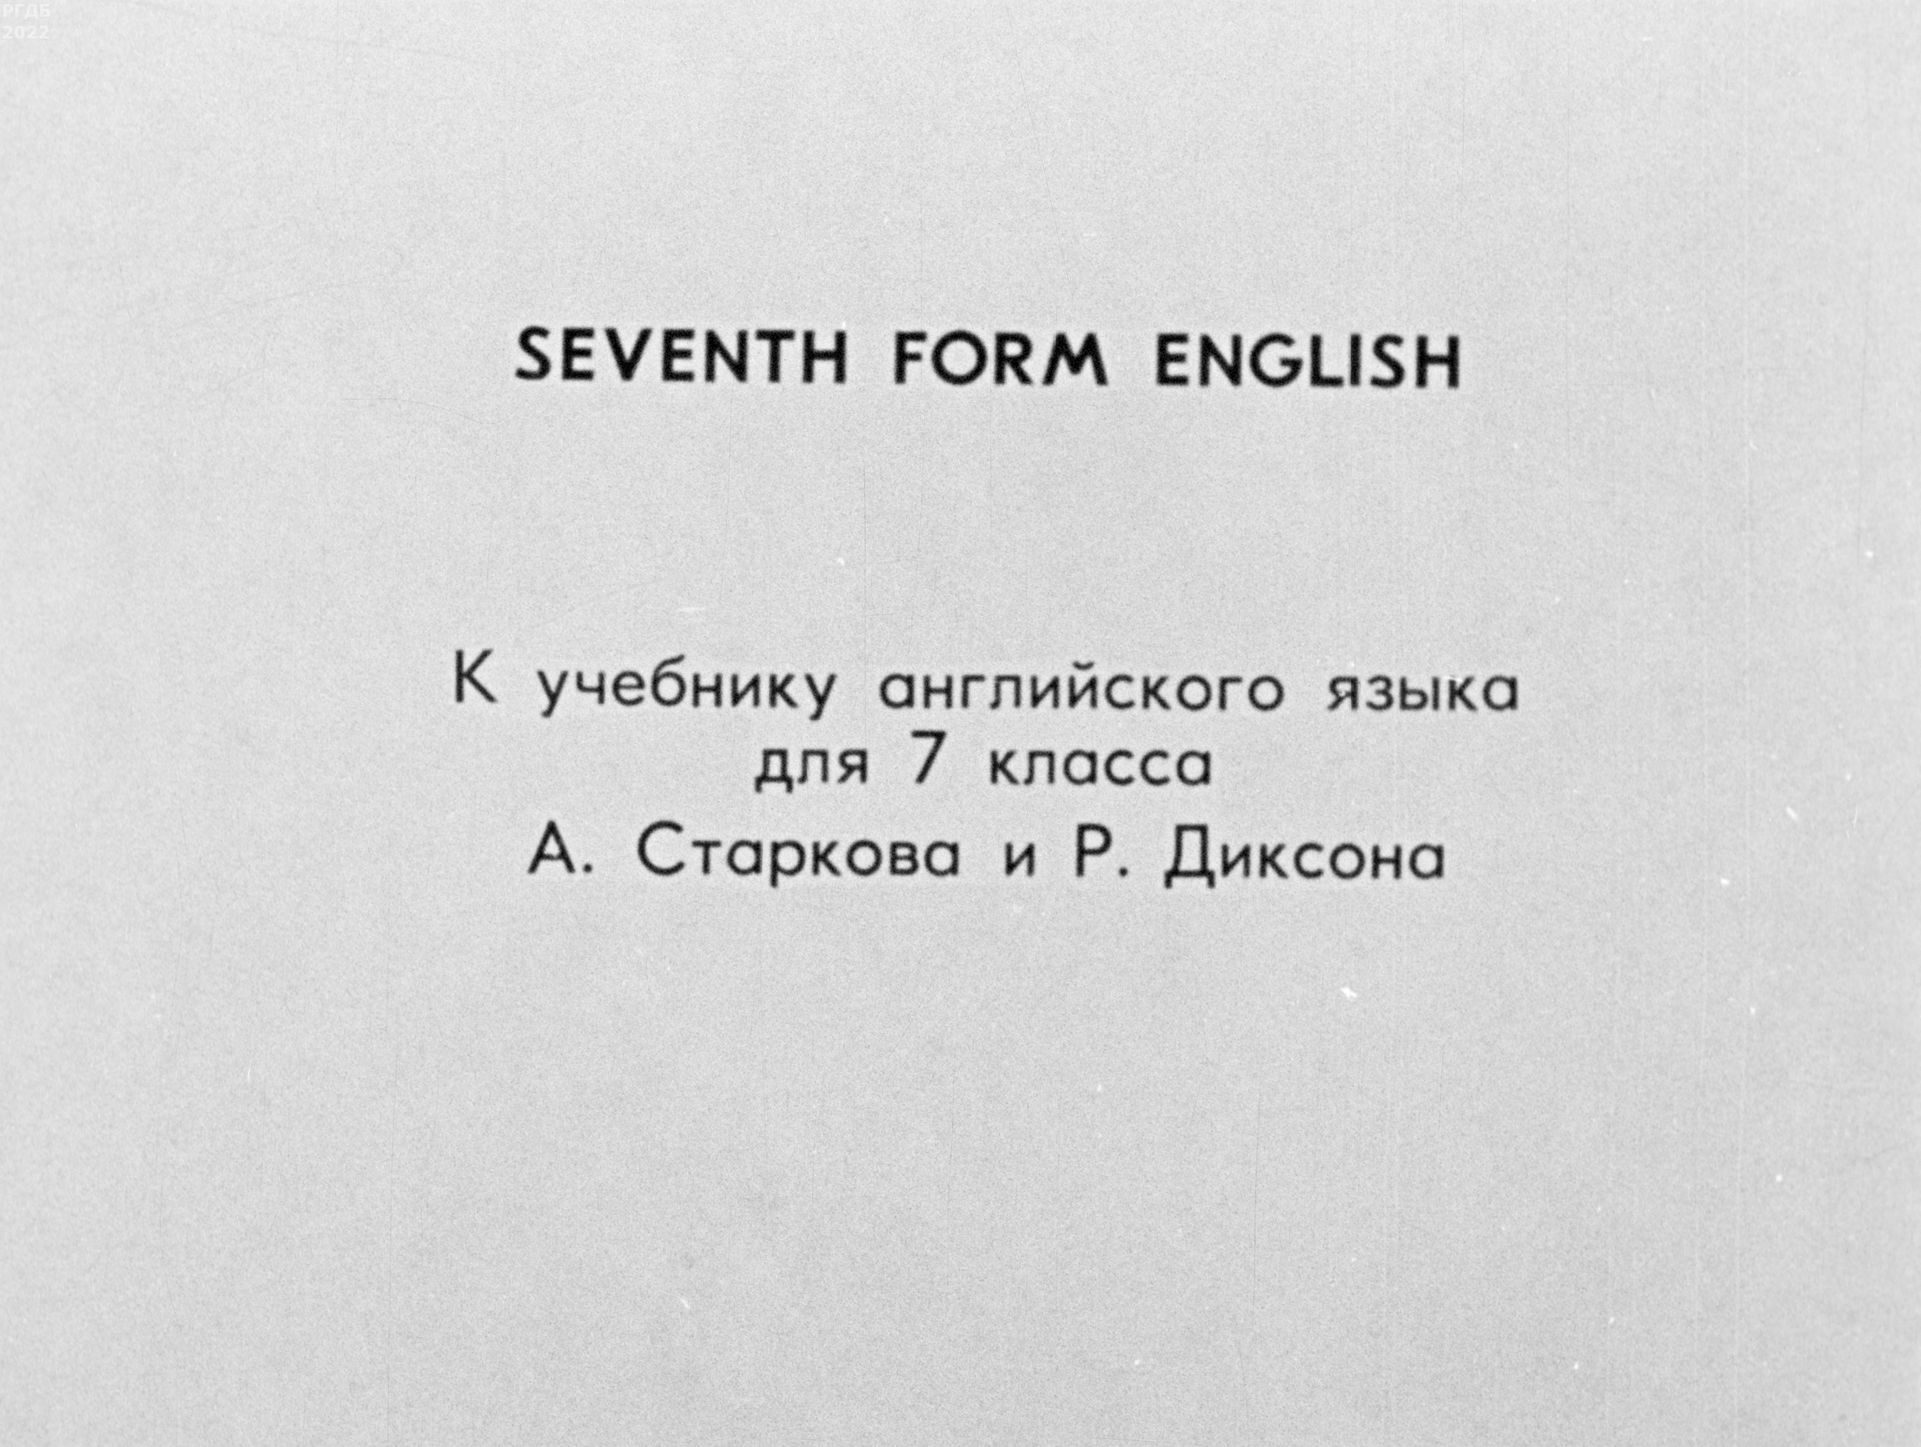 Seventh Form English